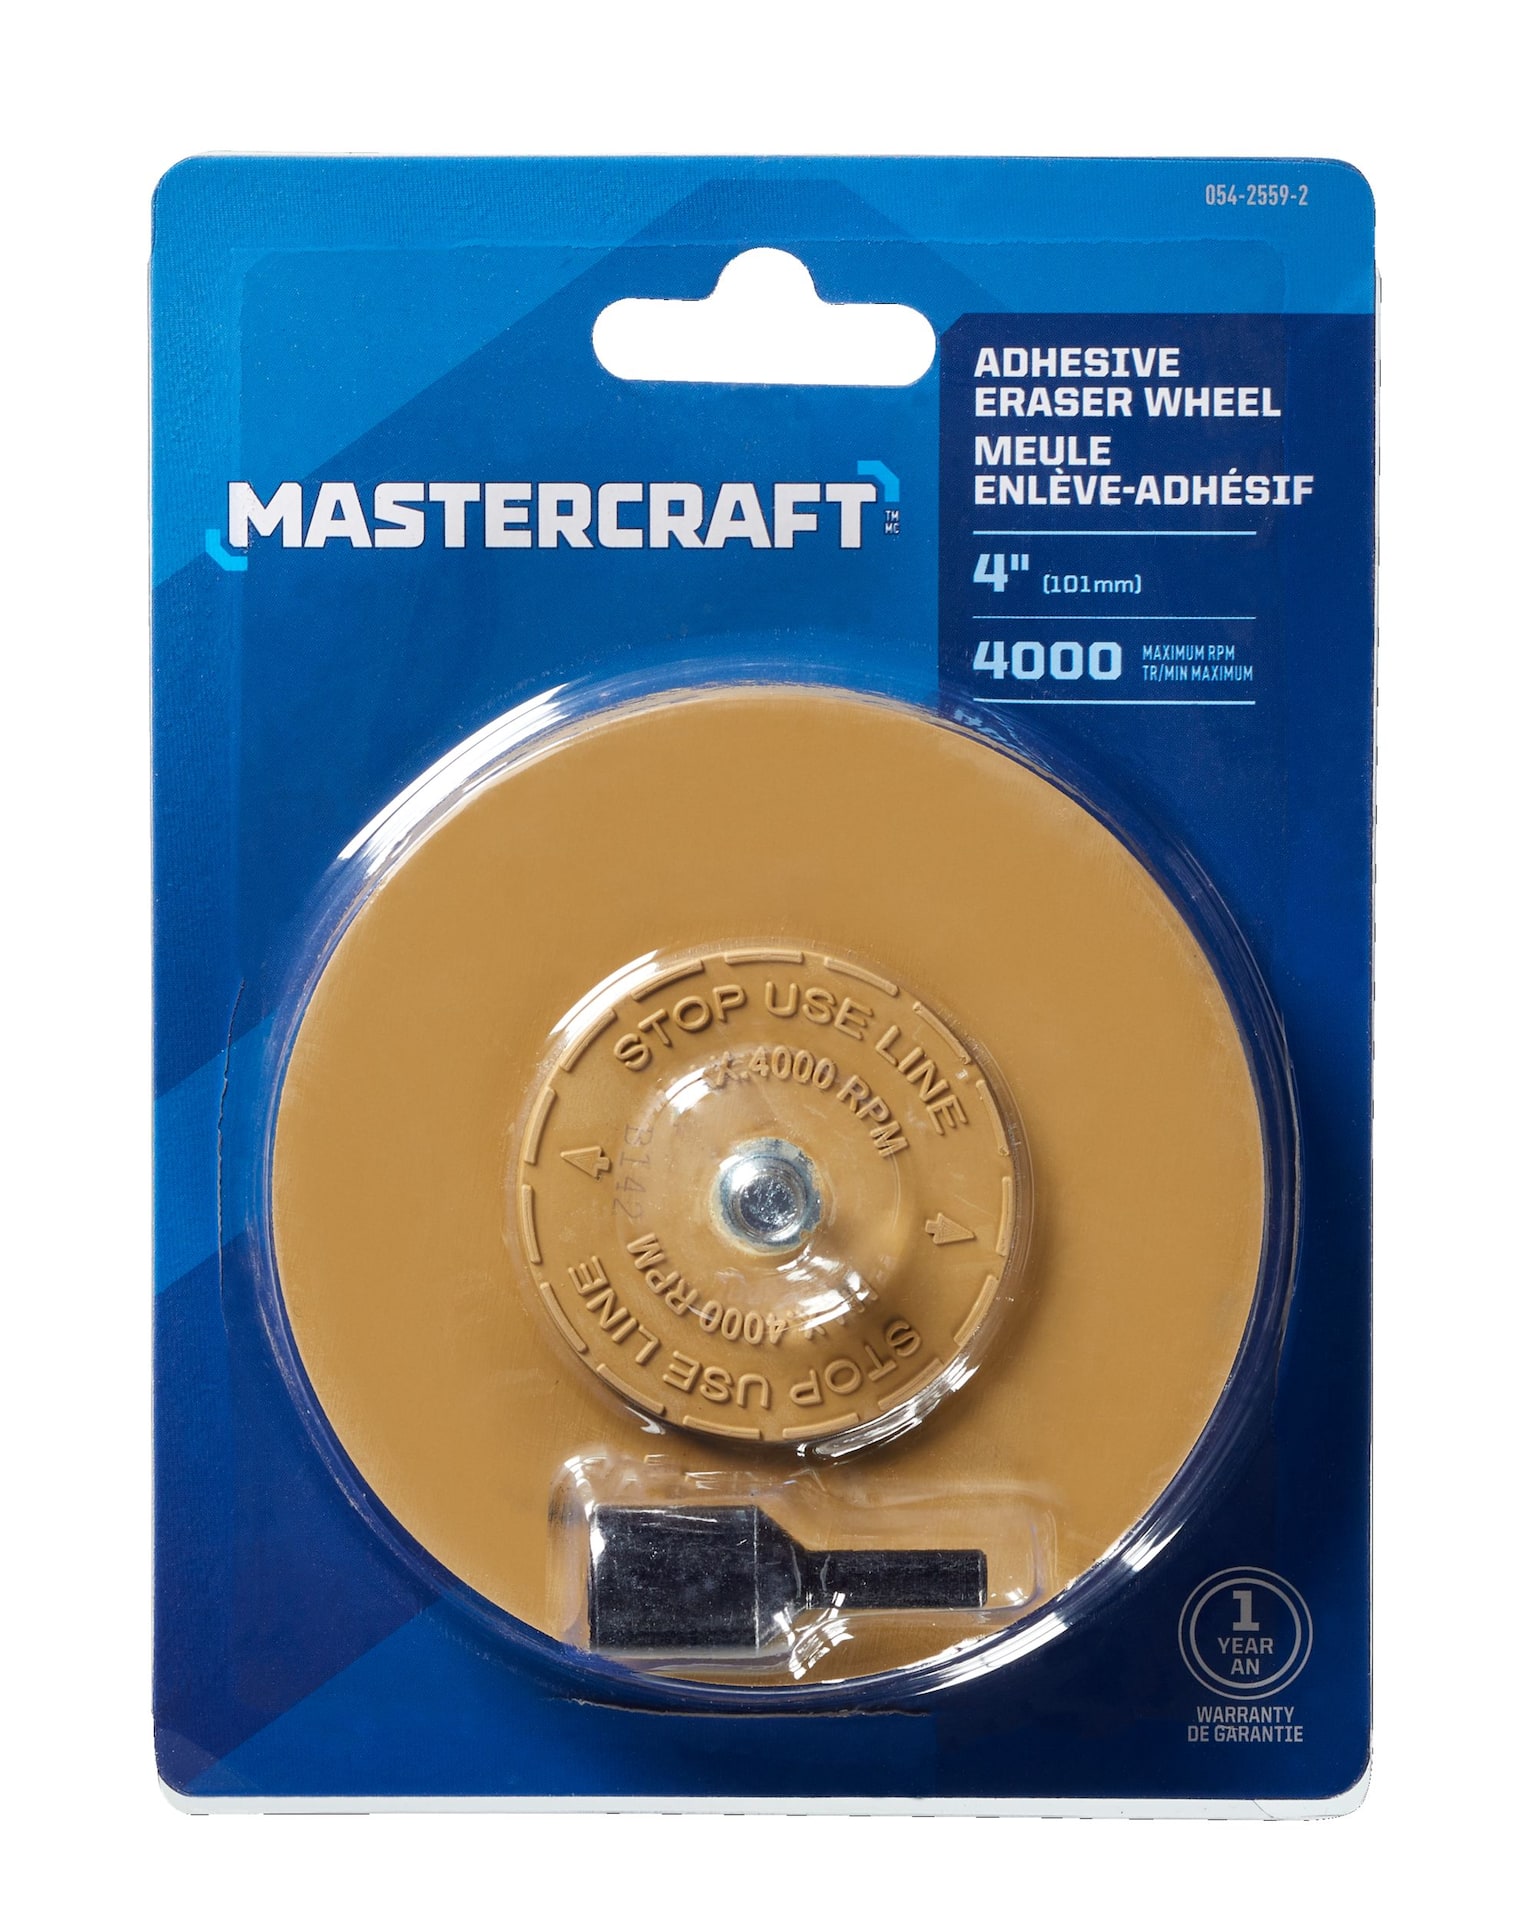 Mastercraft Impact-Ready Round Bristle Drill Brush, Medium, 4-in